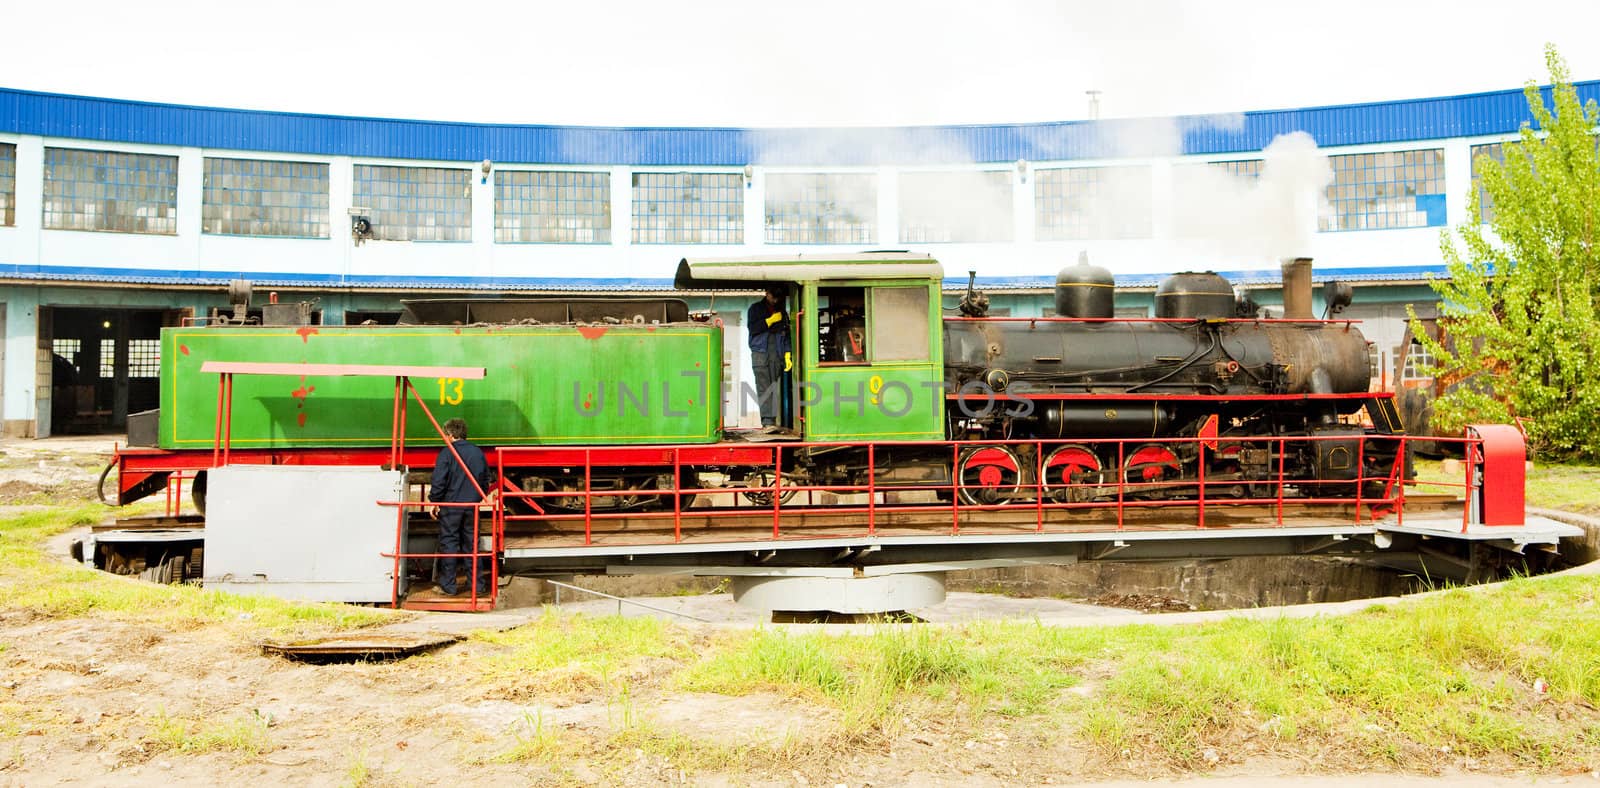 steam locomotive in depot, Kostolac, Serbia by phbcz